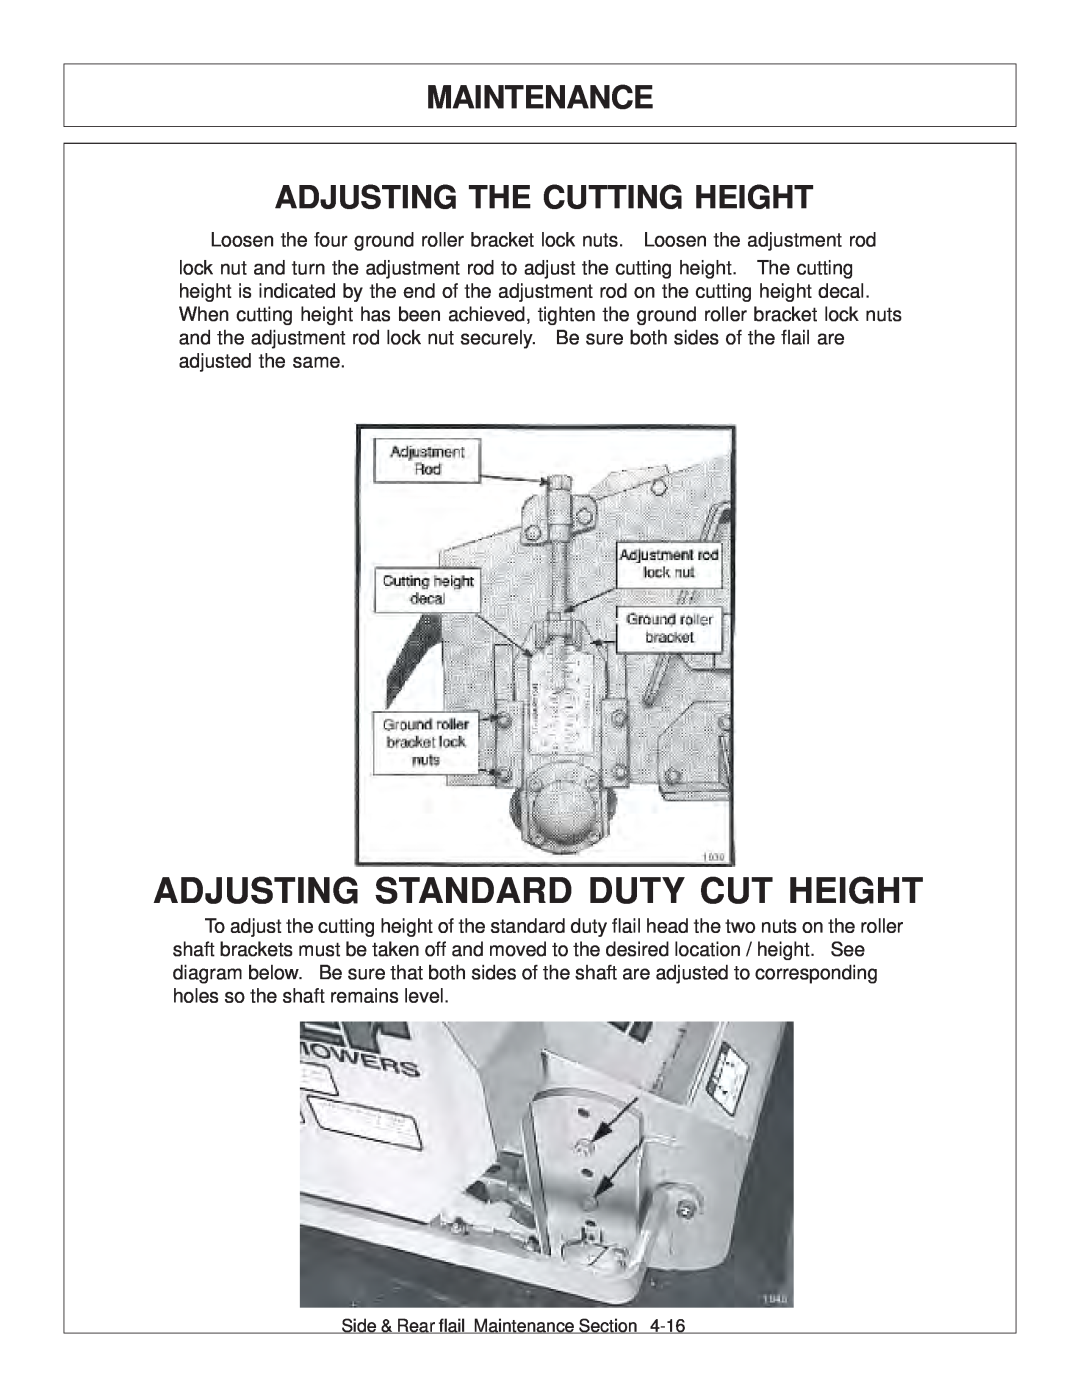 Tiger JD 5093E, JD 5083E, JD 5101E manual Adjusting The Cutting Height, Adjusting Standard Duty Cut Height, Maintenance 